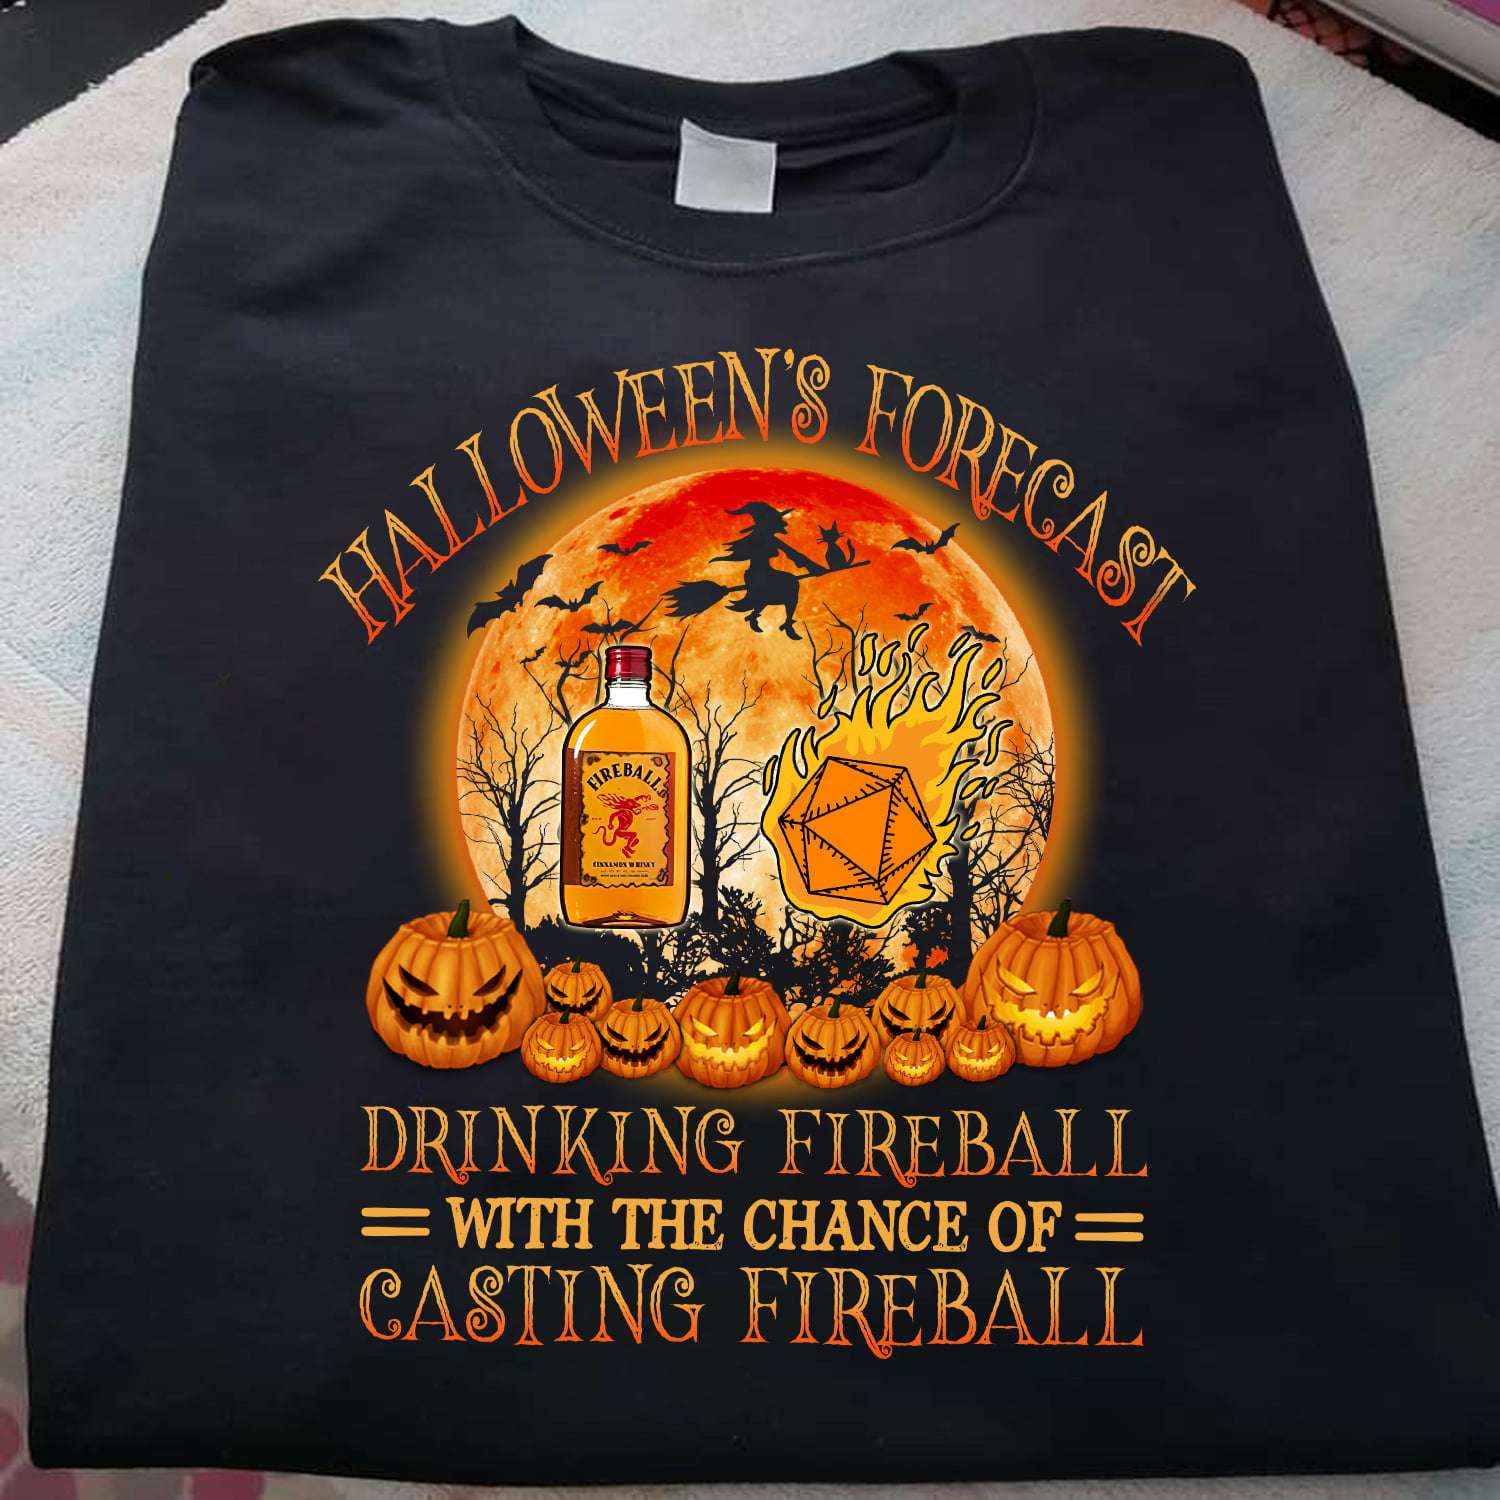 Halloween's forecast - Drinking fireball with the chance of fireball casting - Halloween gift shirt